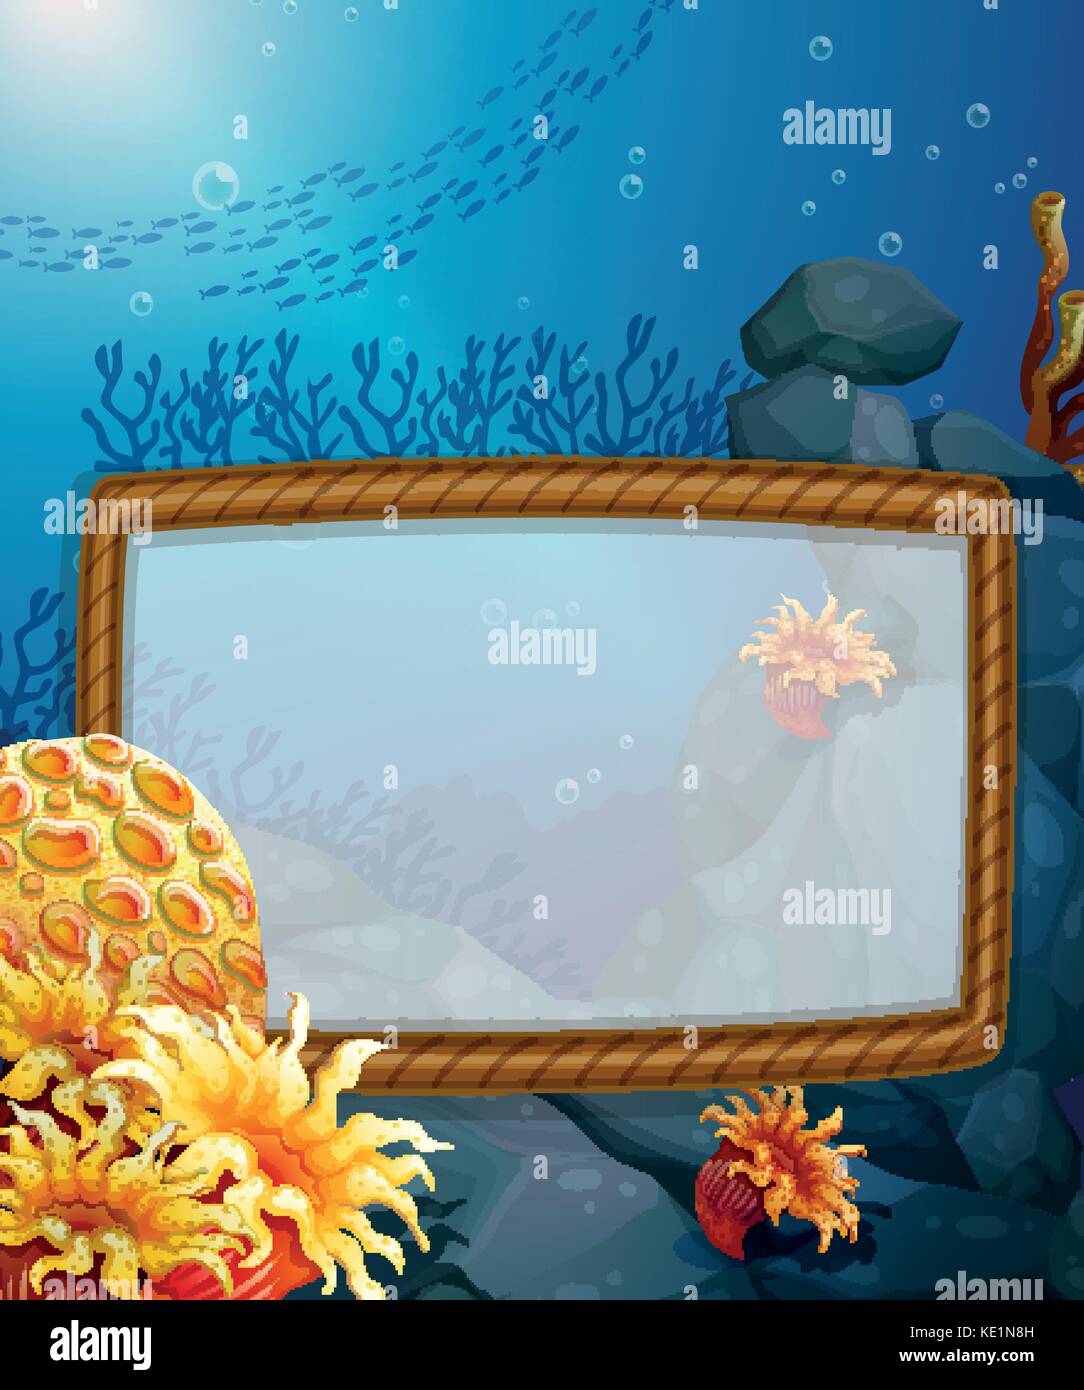 Frame design with underwater background illustration Stock Vector